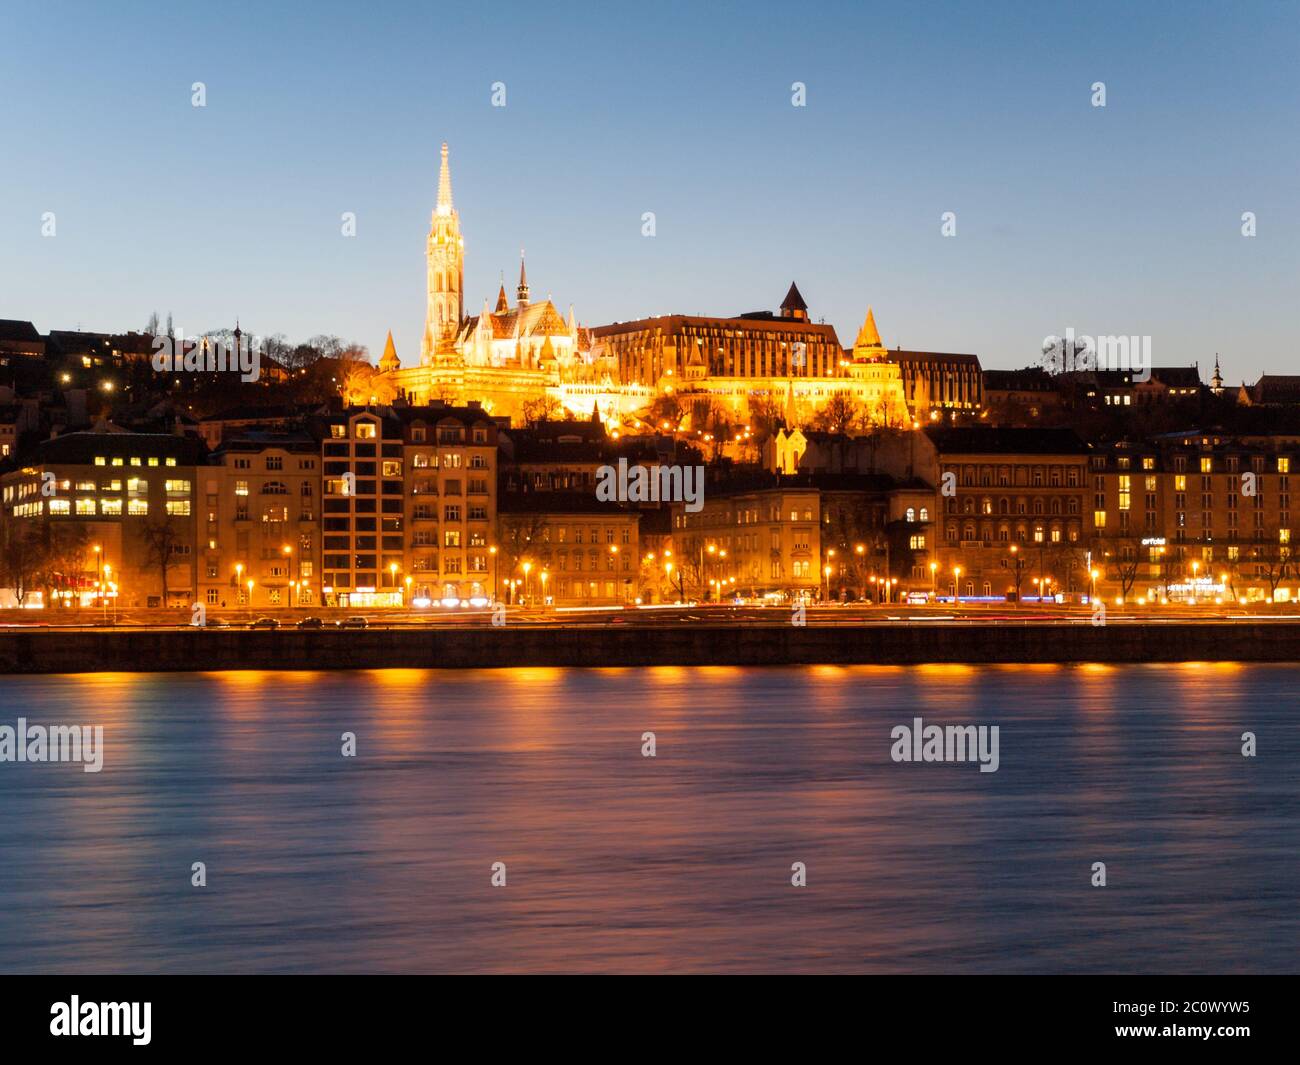 St. Matthias church and Fishermen's Bastion. View from Danube River. Budapest, Hungary. Night shot. Stock Photo